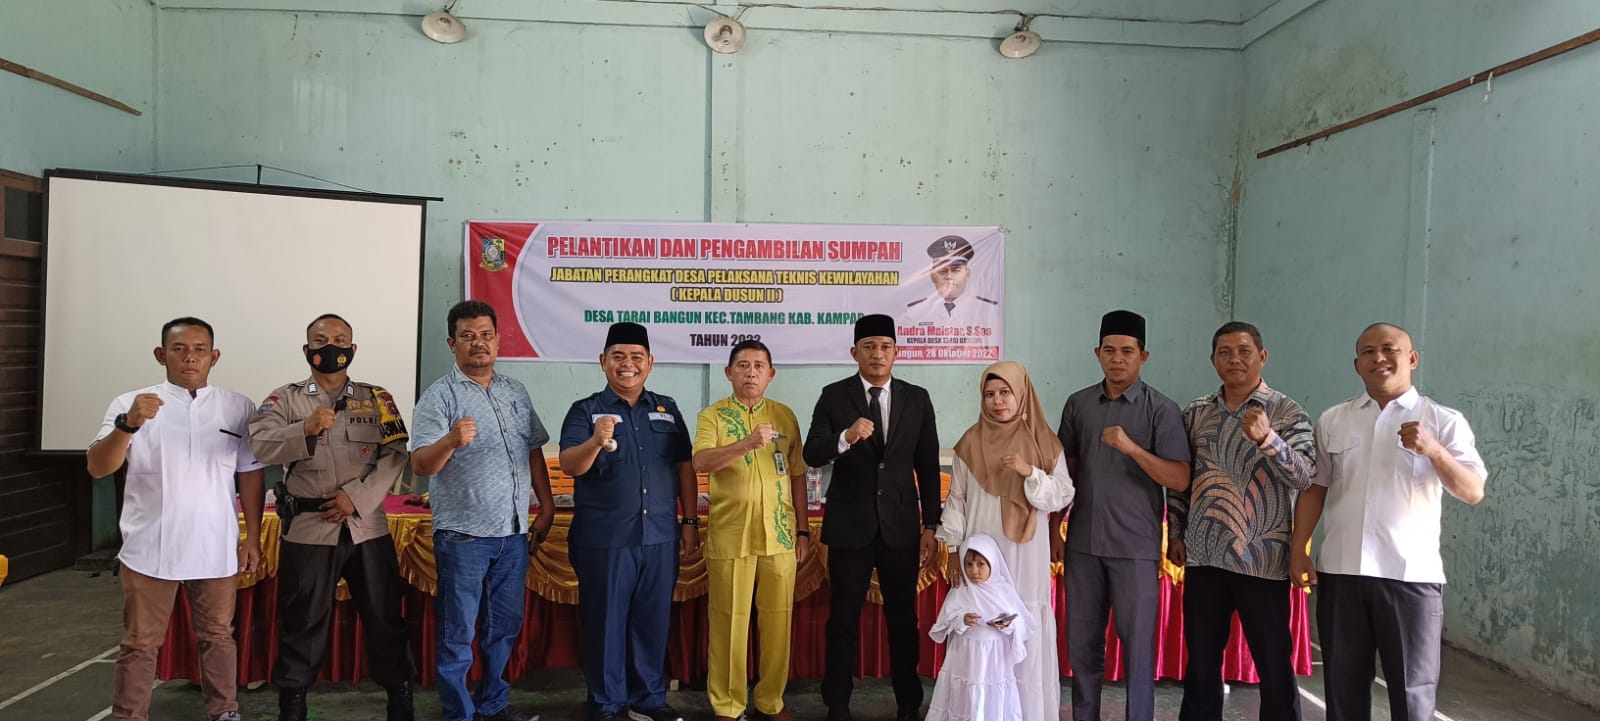 Kades Tarai Bangun Andra Maistar Resmi Lantik Yovi Jadi Kepala Dusun II